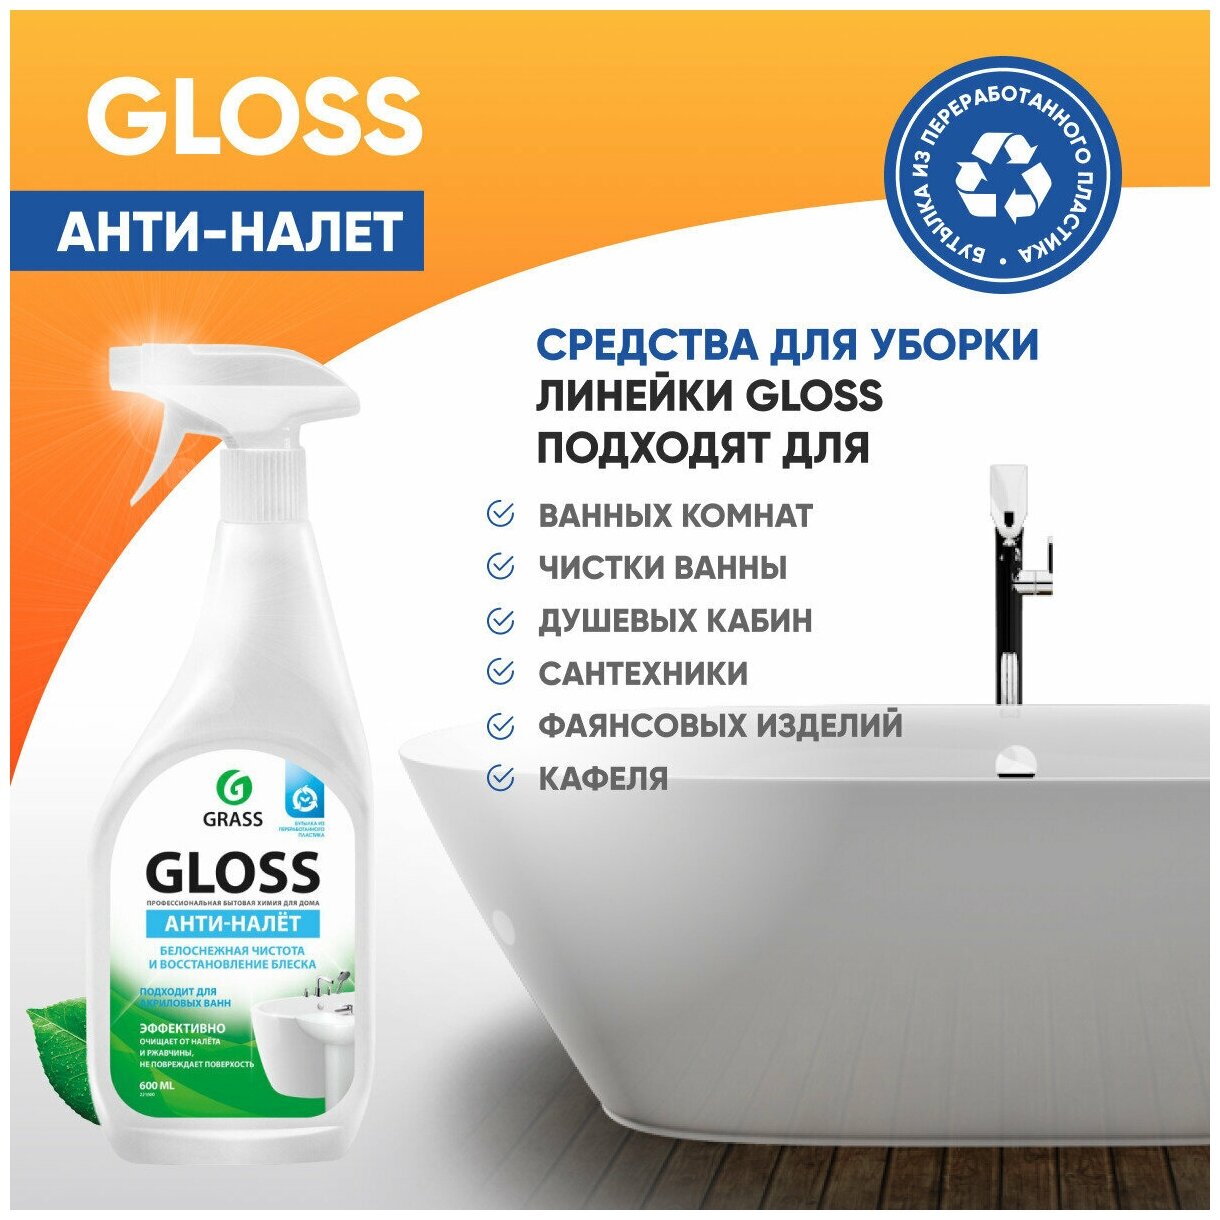 GRASS Чистящее средство для ванной комнаты Grass Gloss, 600 мл - фотография № 17